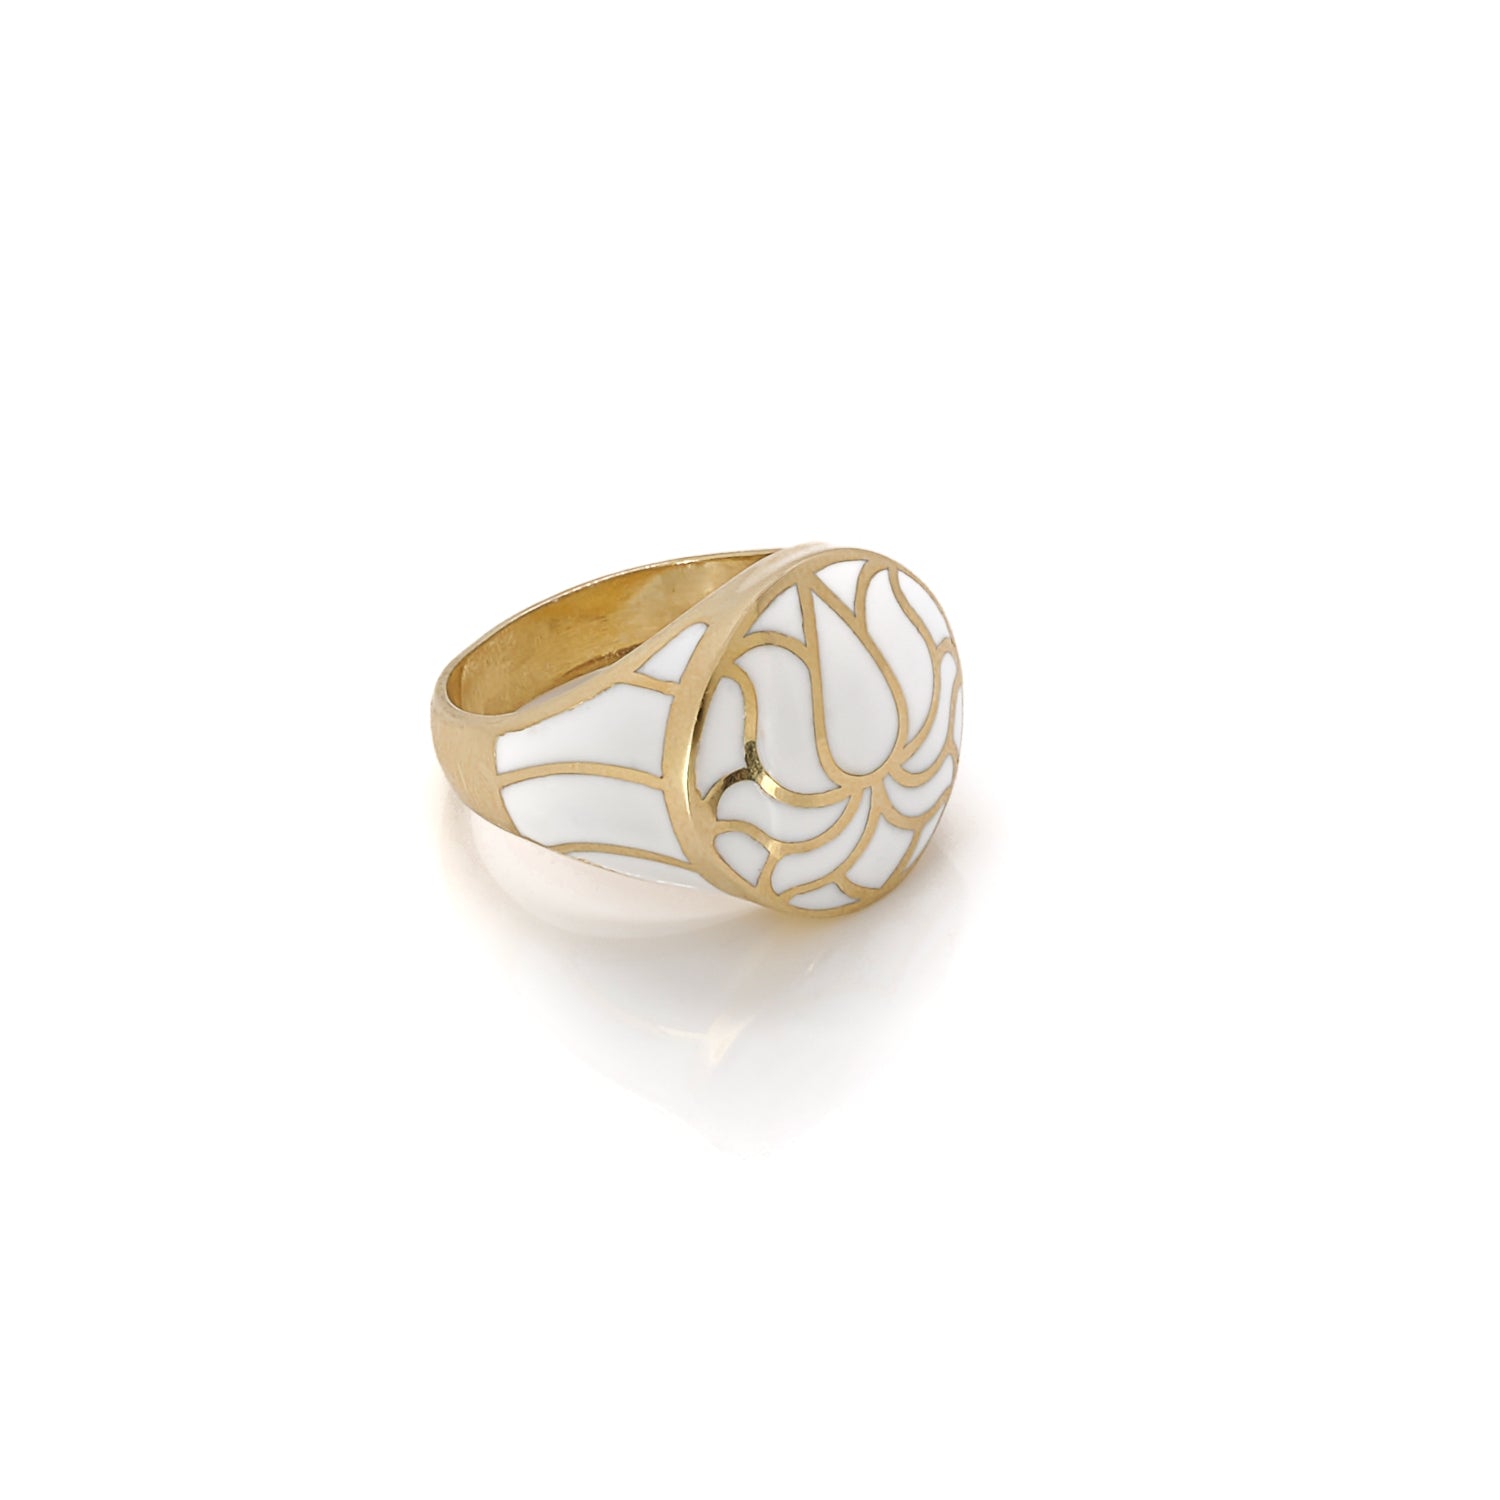 Lotus Blossom Ring - Sterling Silver &amp; Enamel, Handmade in USA